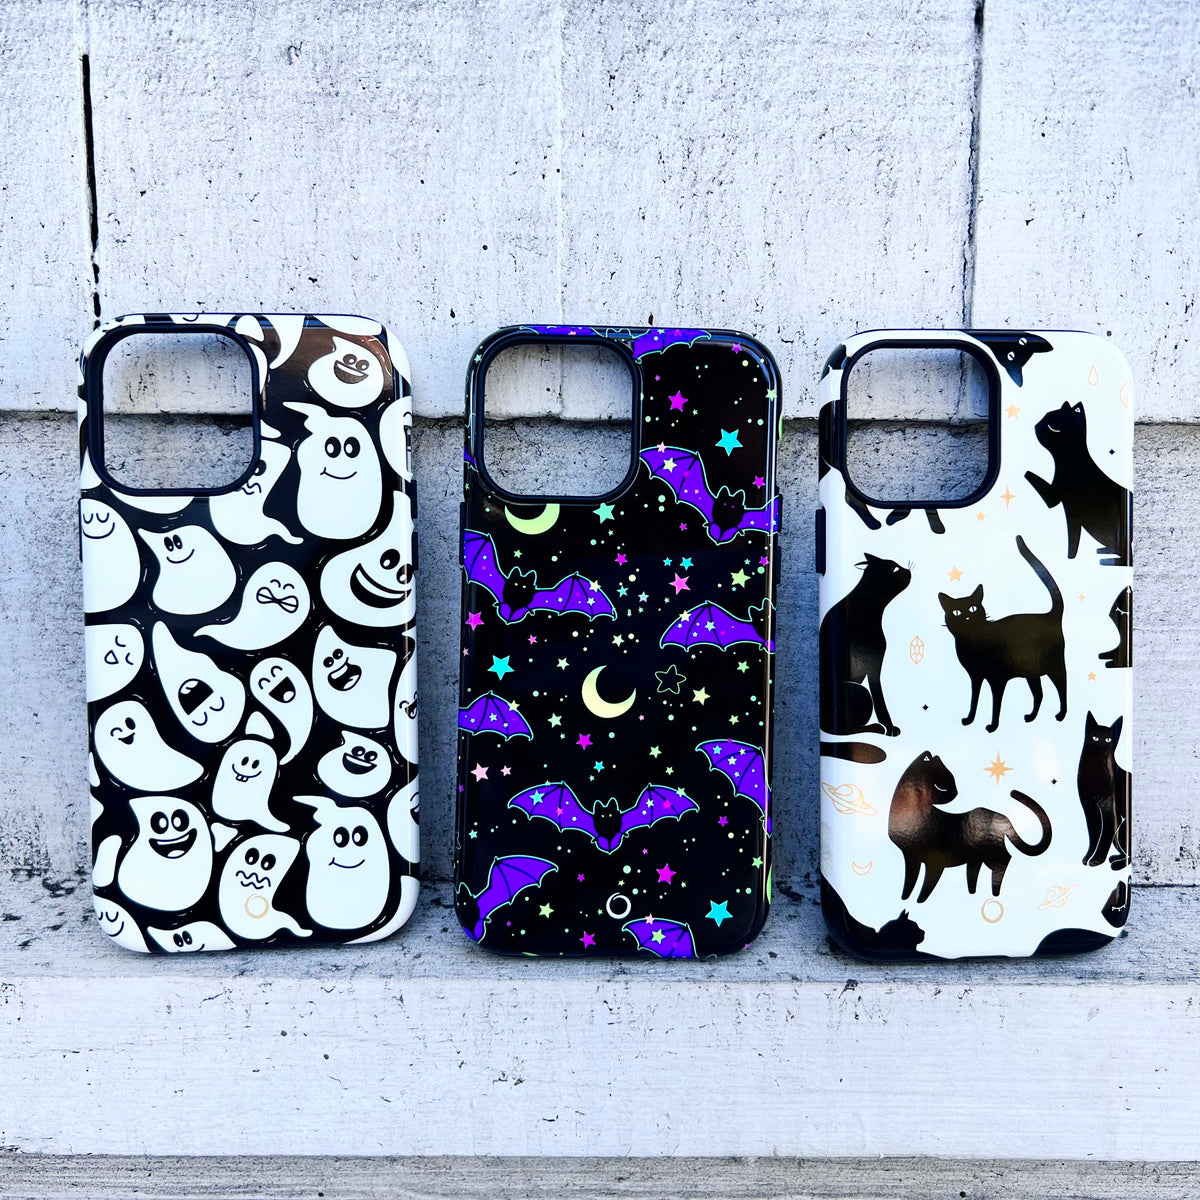 Black Cats iPhone Case - iPhone 12 Pro